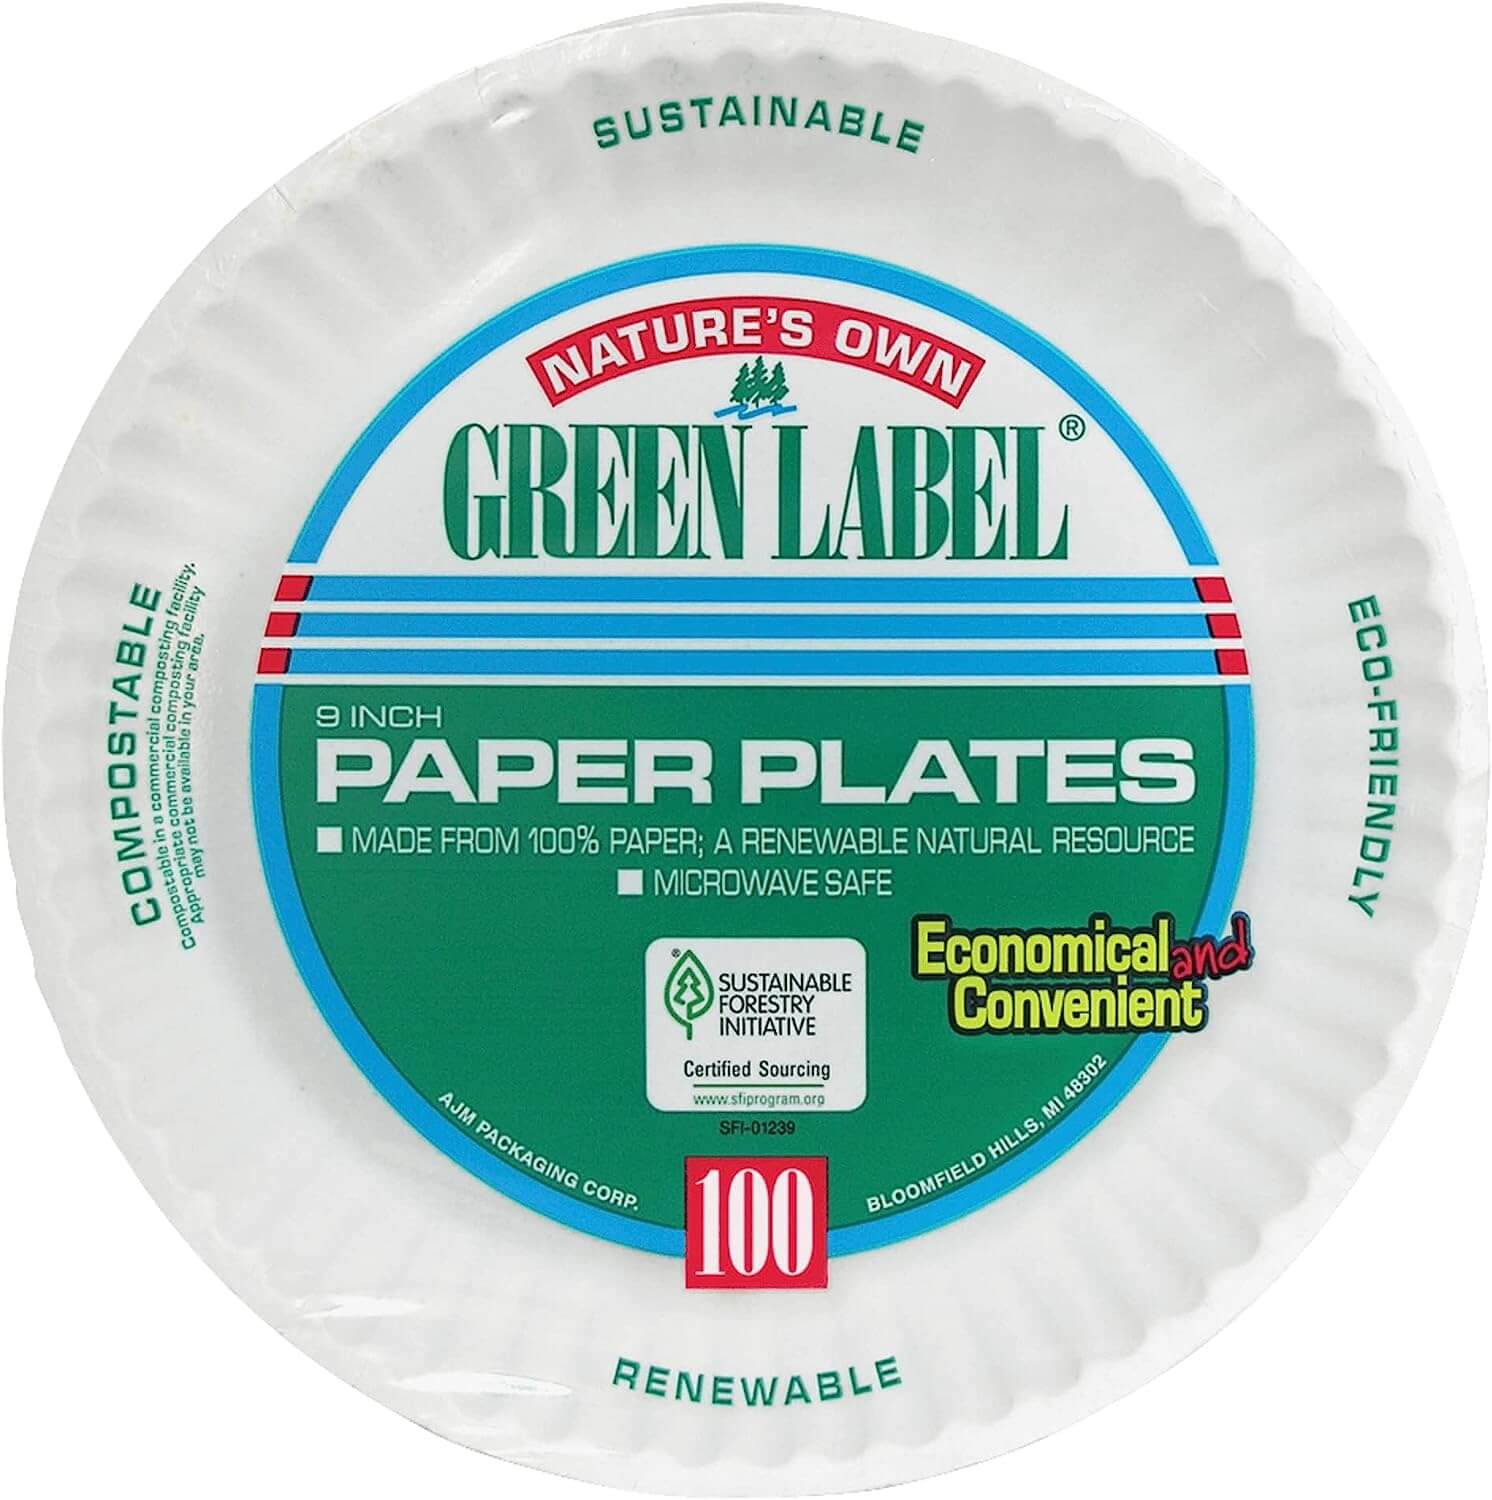 9" paper plates